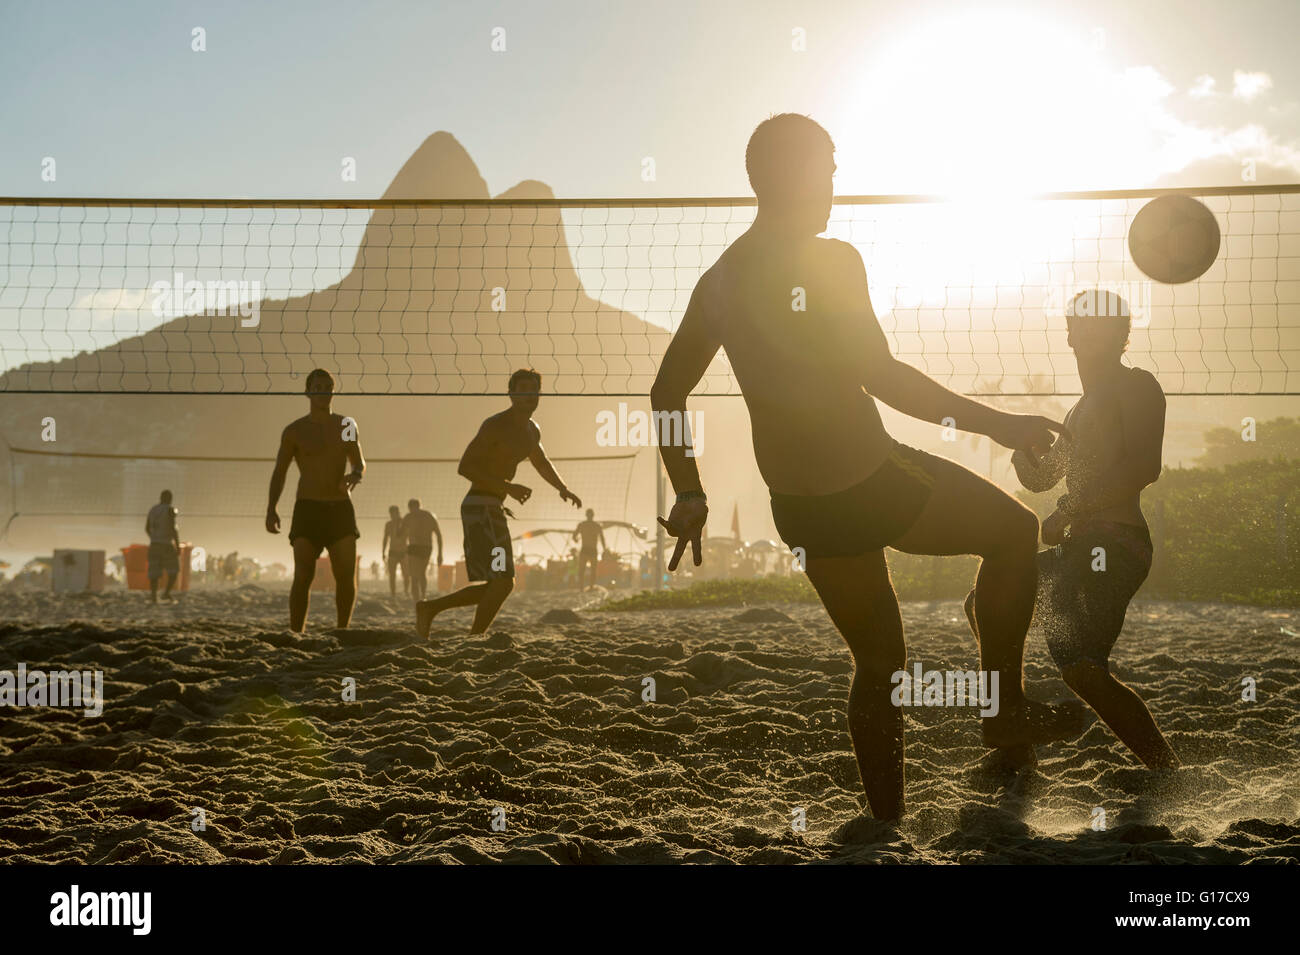 RIO DE JANEIRO - MARCH 27, 2016: Brazilians play beach futevôlei (footvolley), a sport combining football/soccer and volleyball. Stock Photo